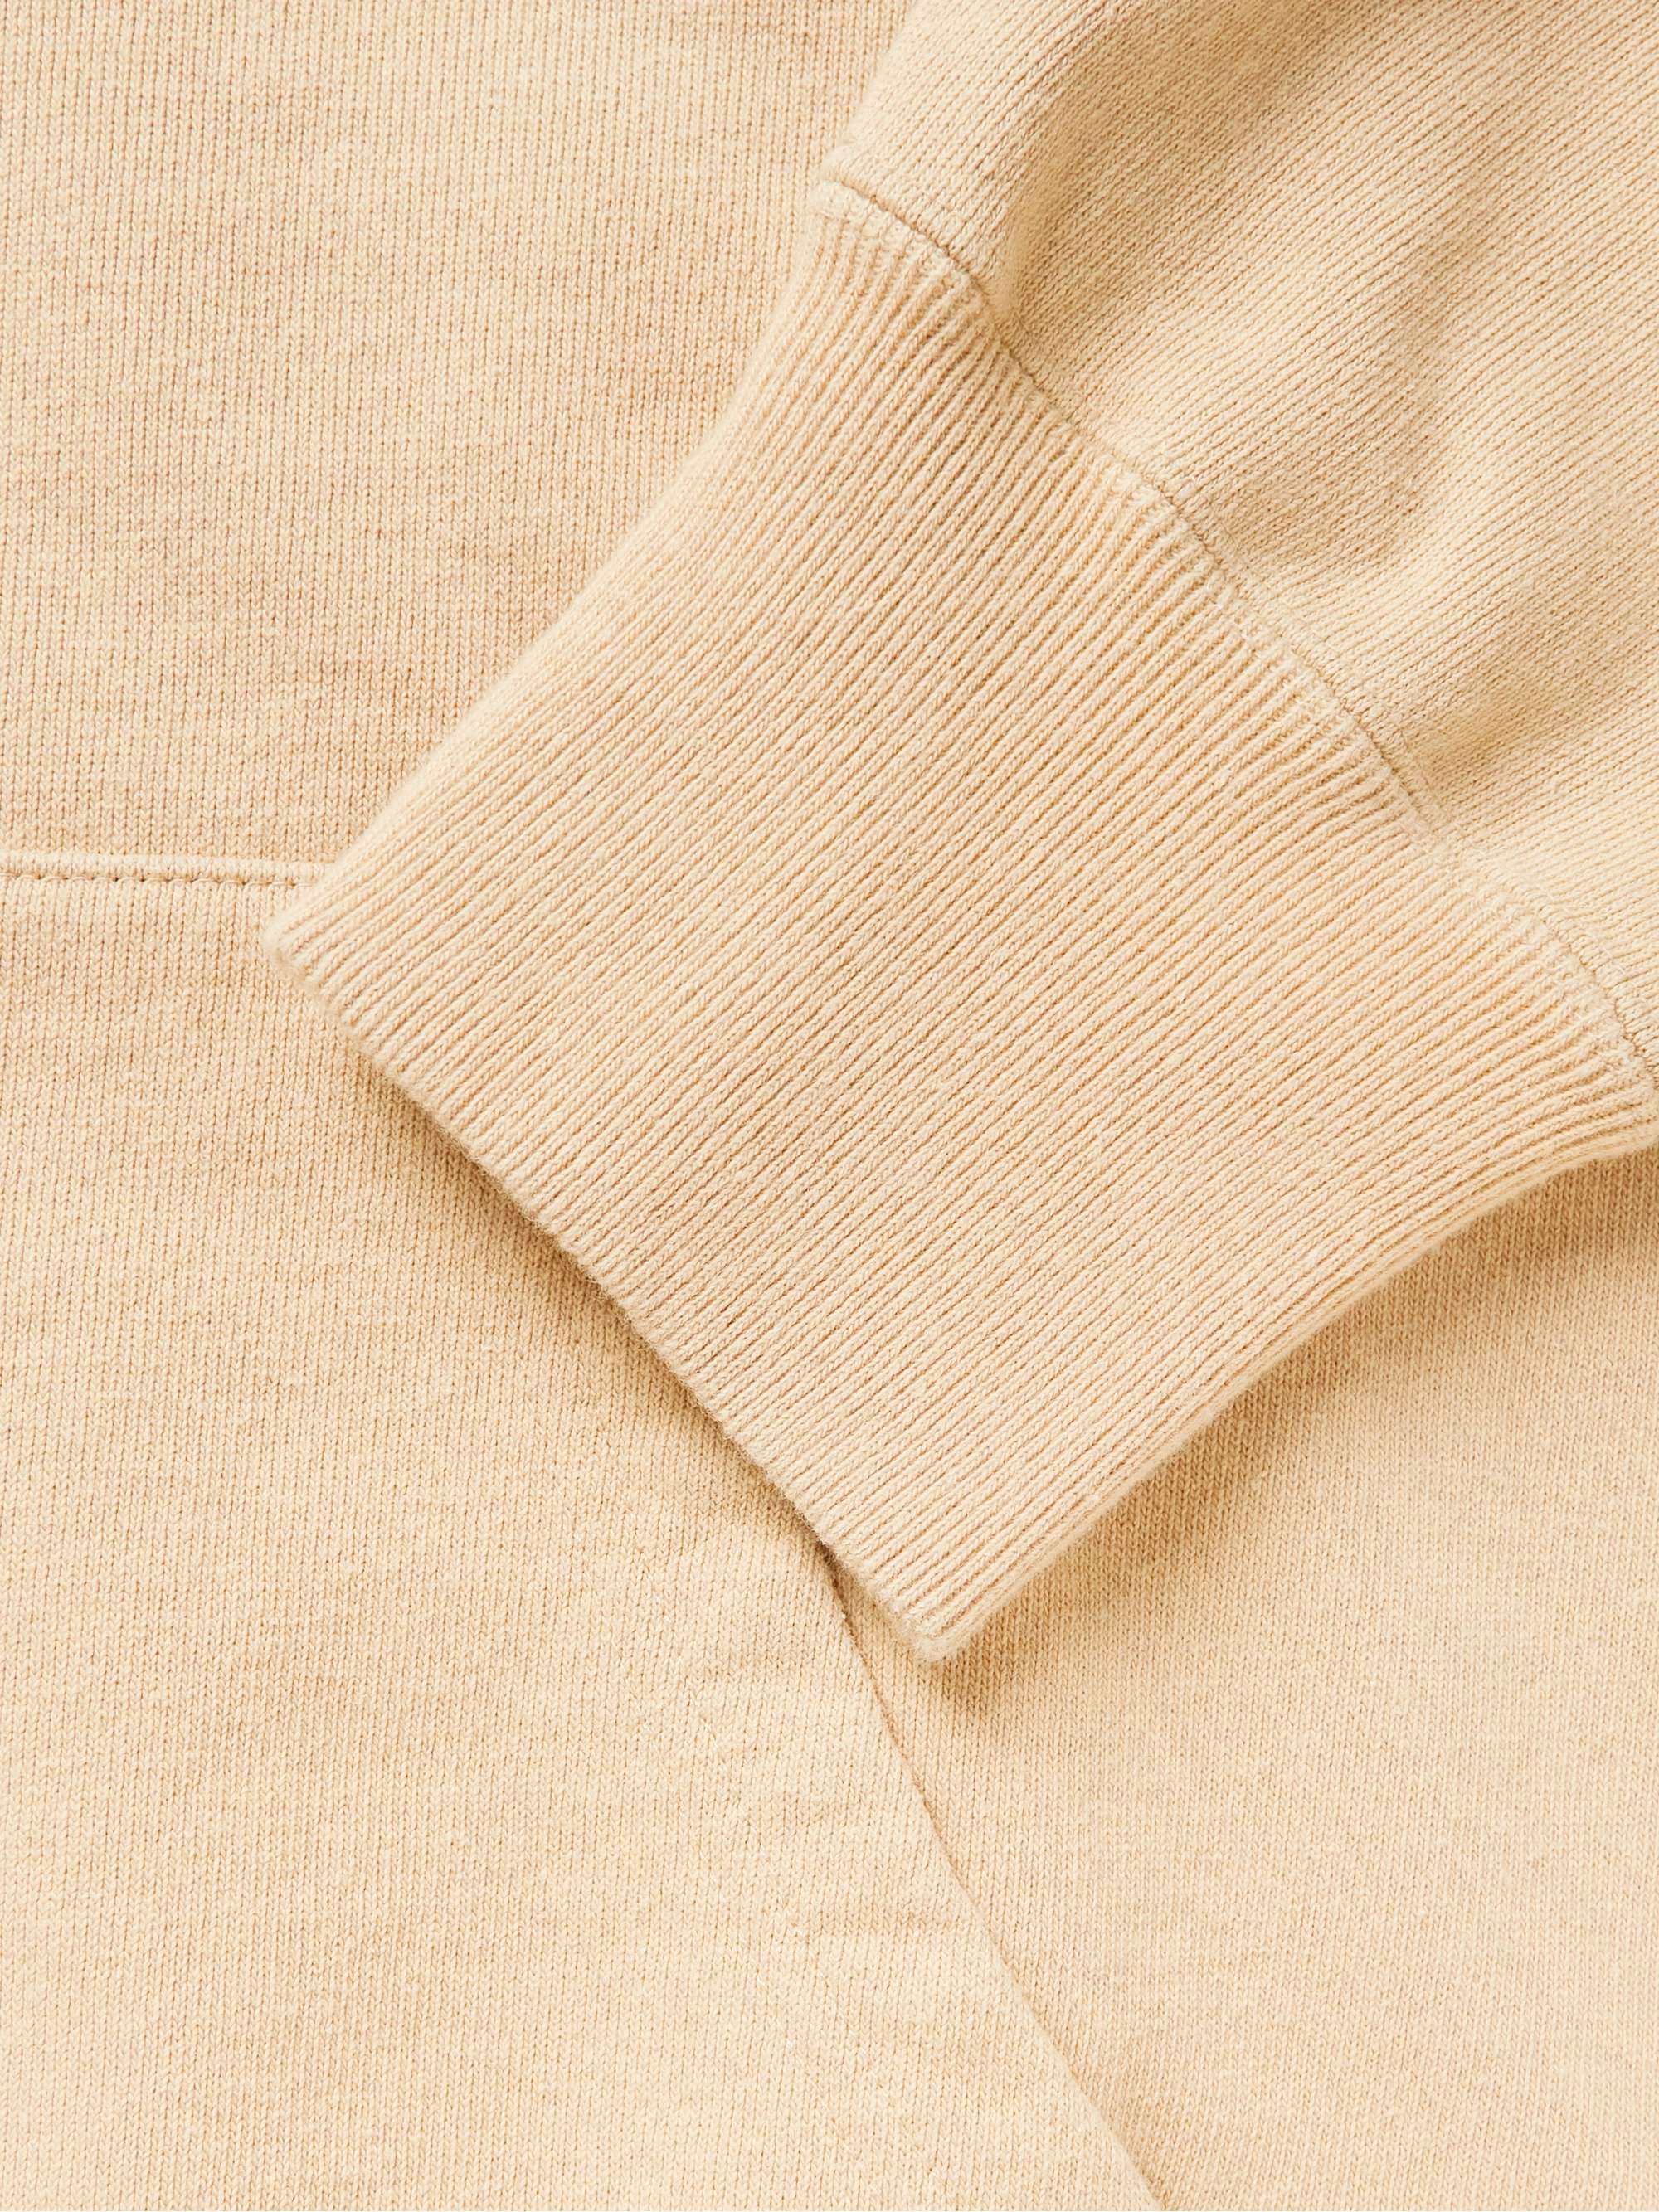 EDWIN Garment-Dyed Cotton-Jersey Hoodie